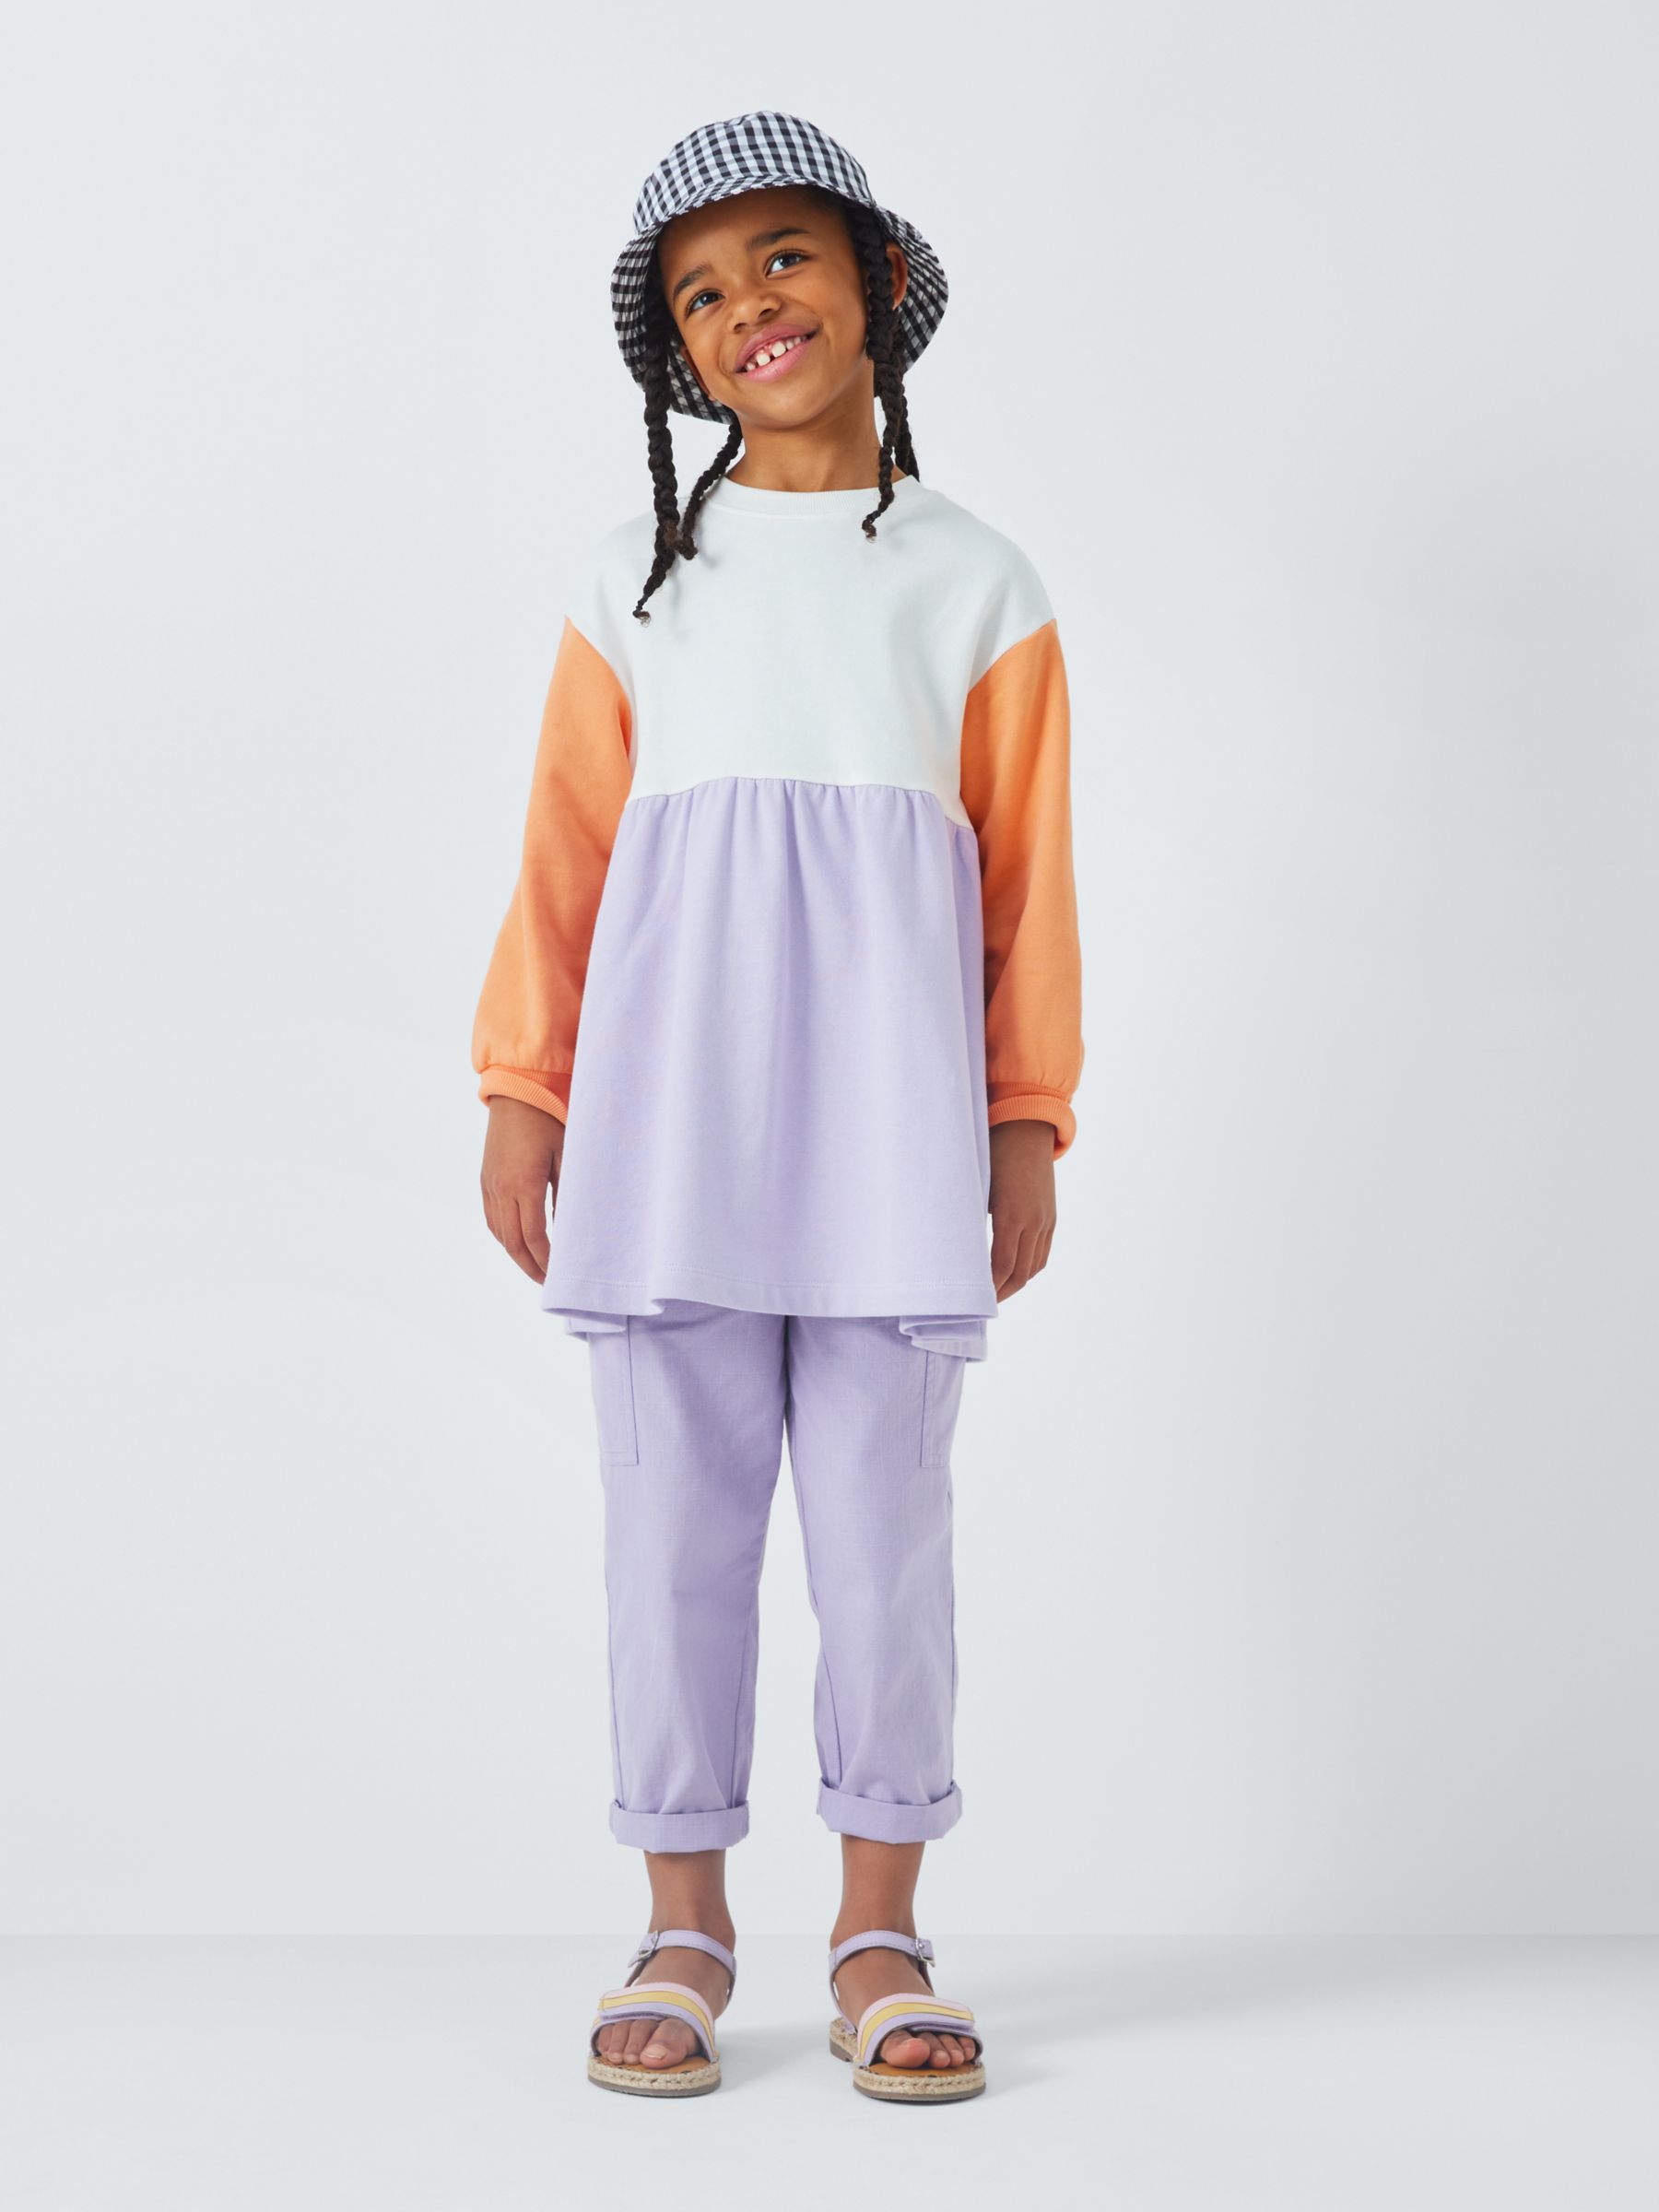 John Lewis ANYDAY Kids' Colour Block Jumper Dress, Multi, 7 years